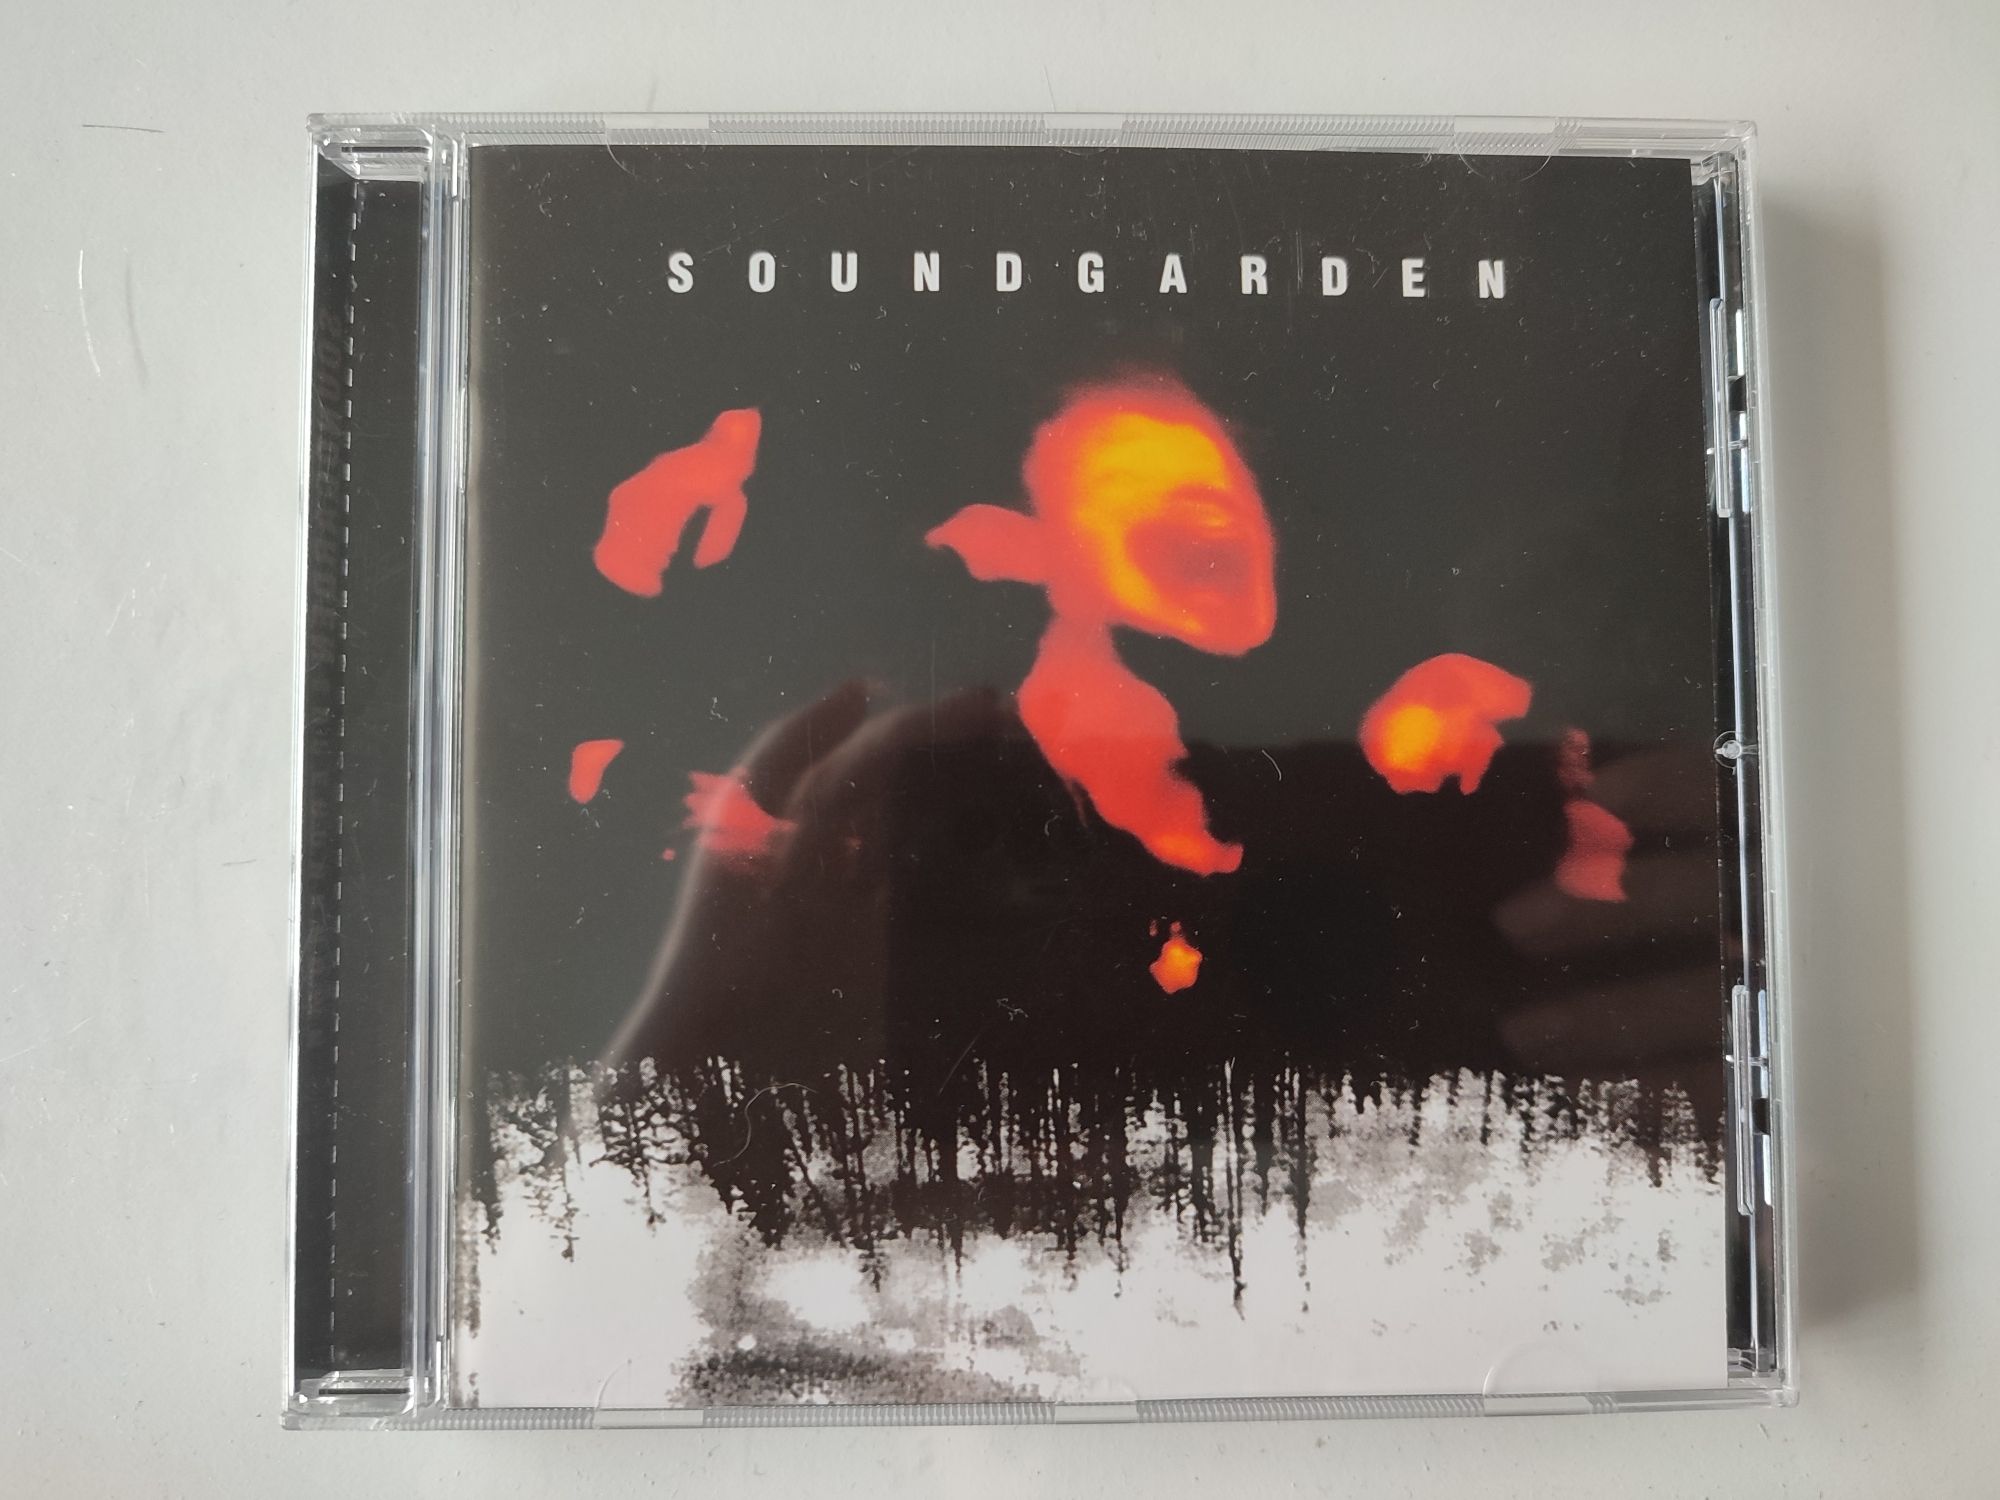 Soundgarden - Superknown CD